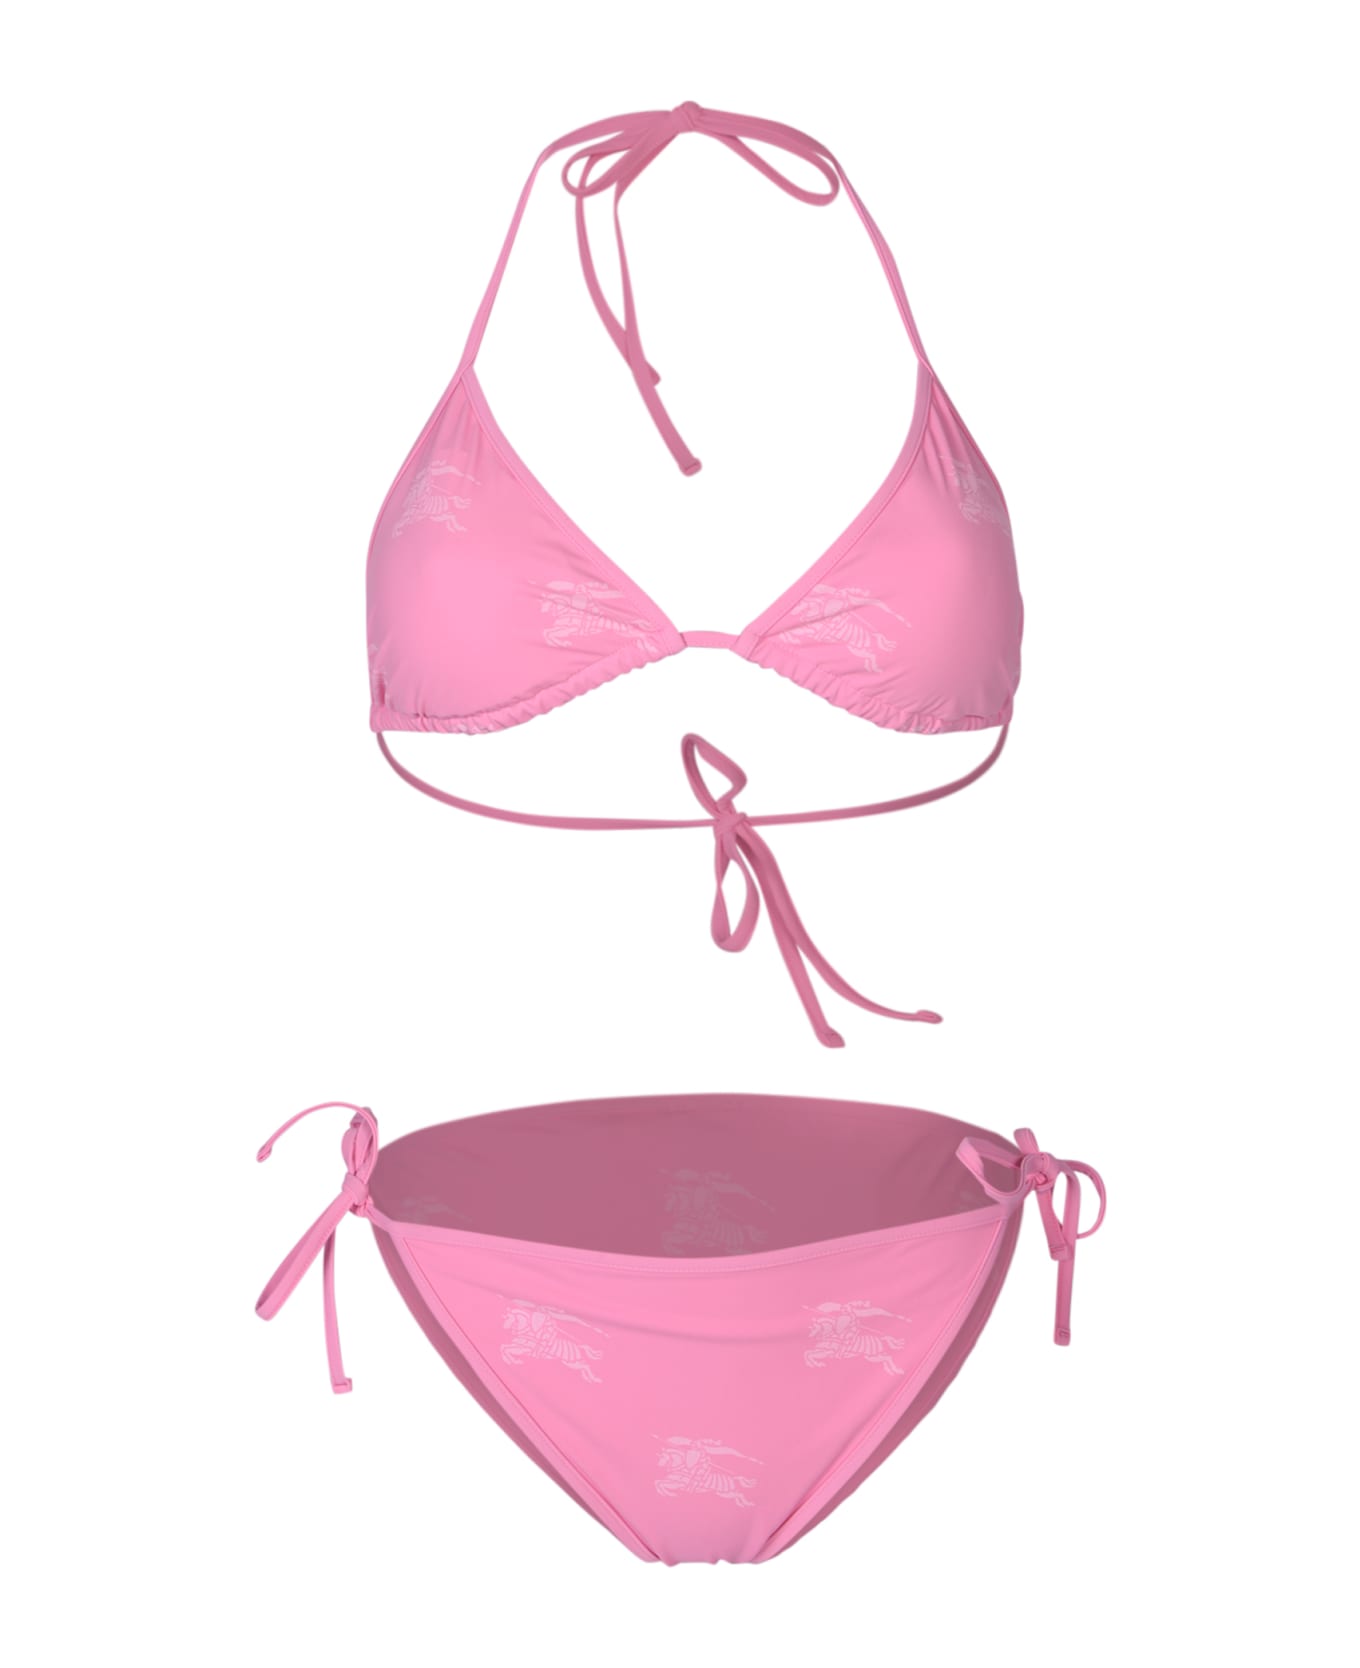 Burberry Pink Stretch Nylon Bikini - Pink